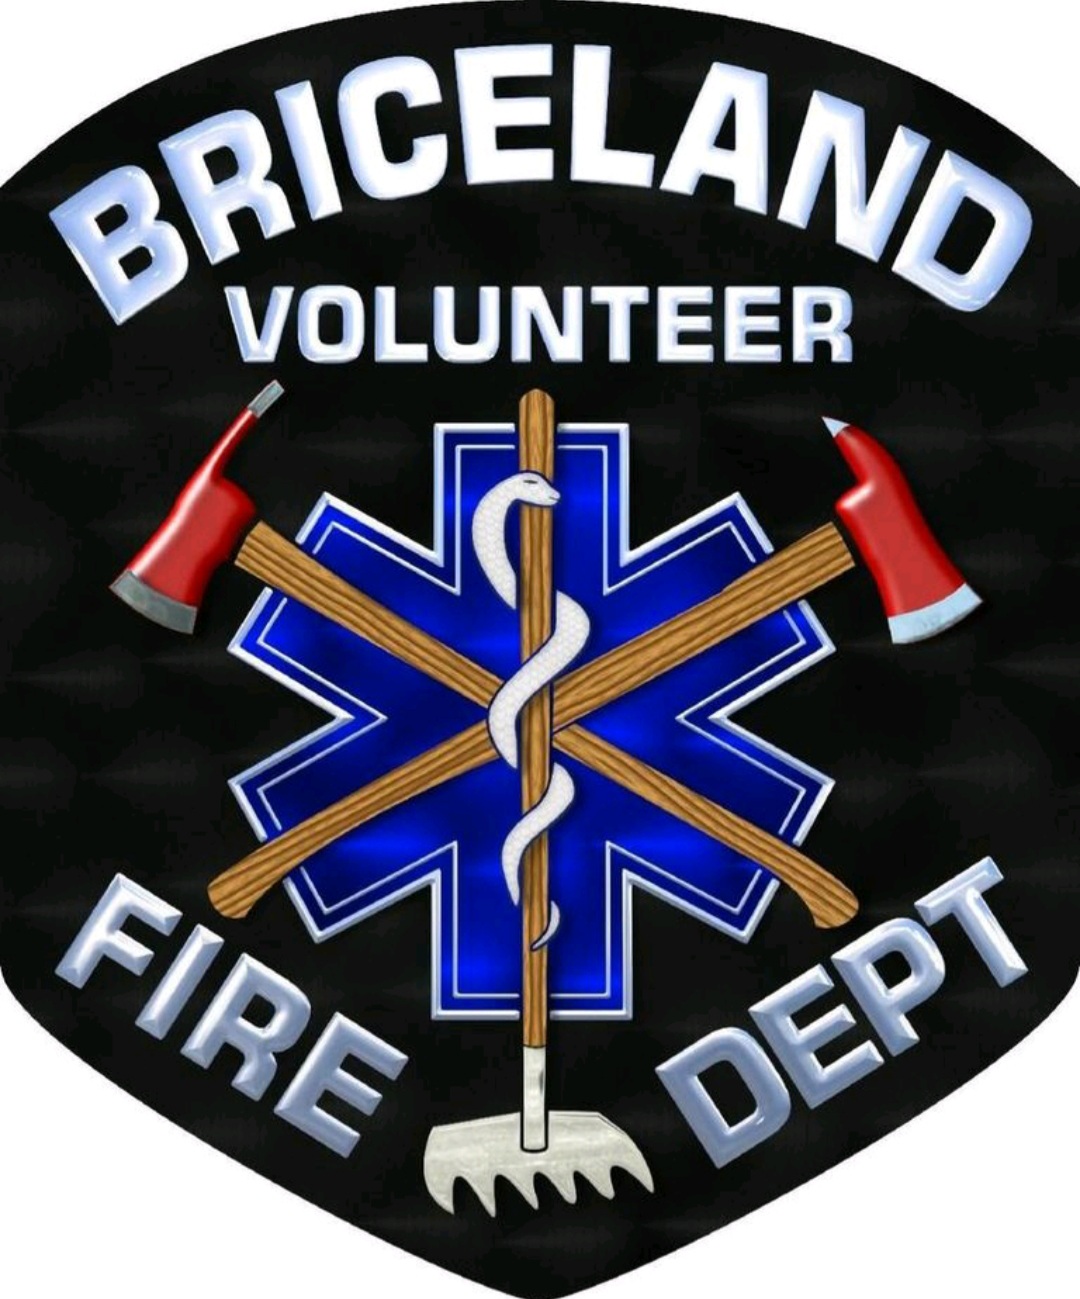 Briceland Volunteer Fire Department